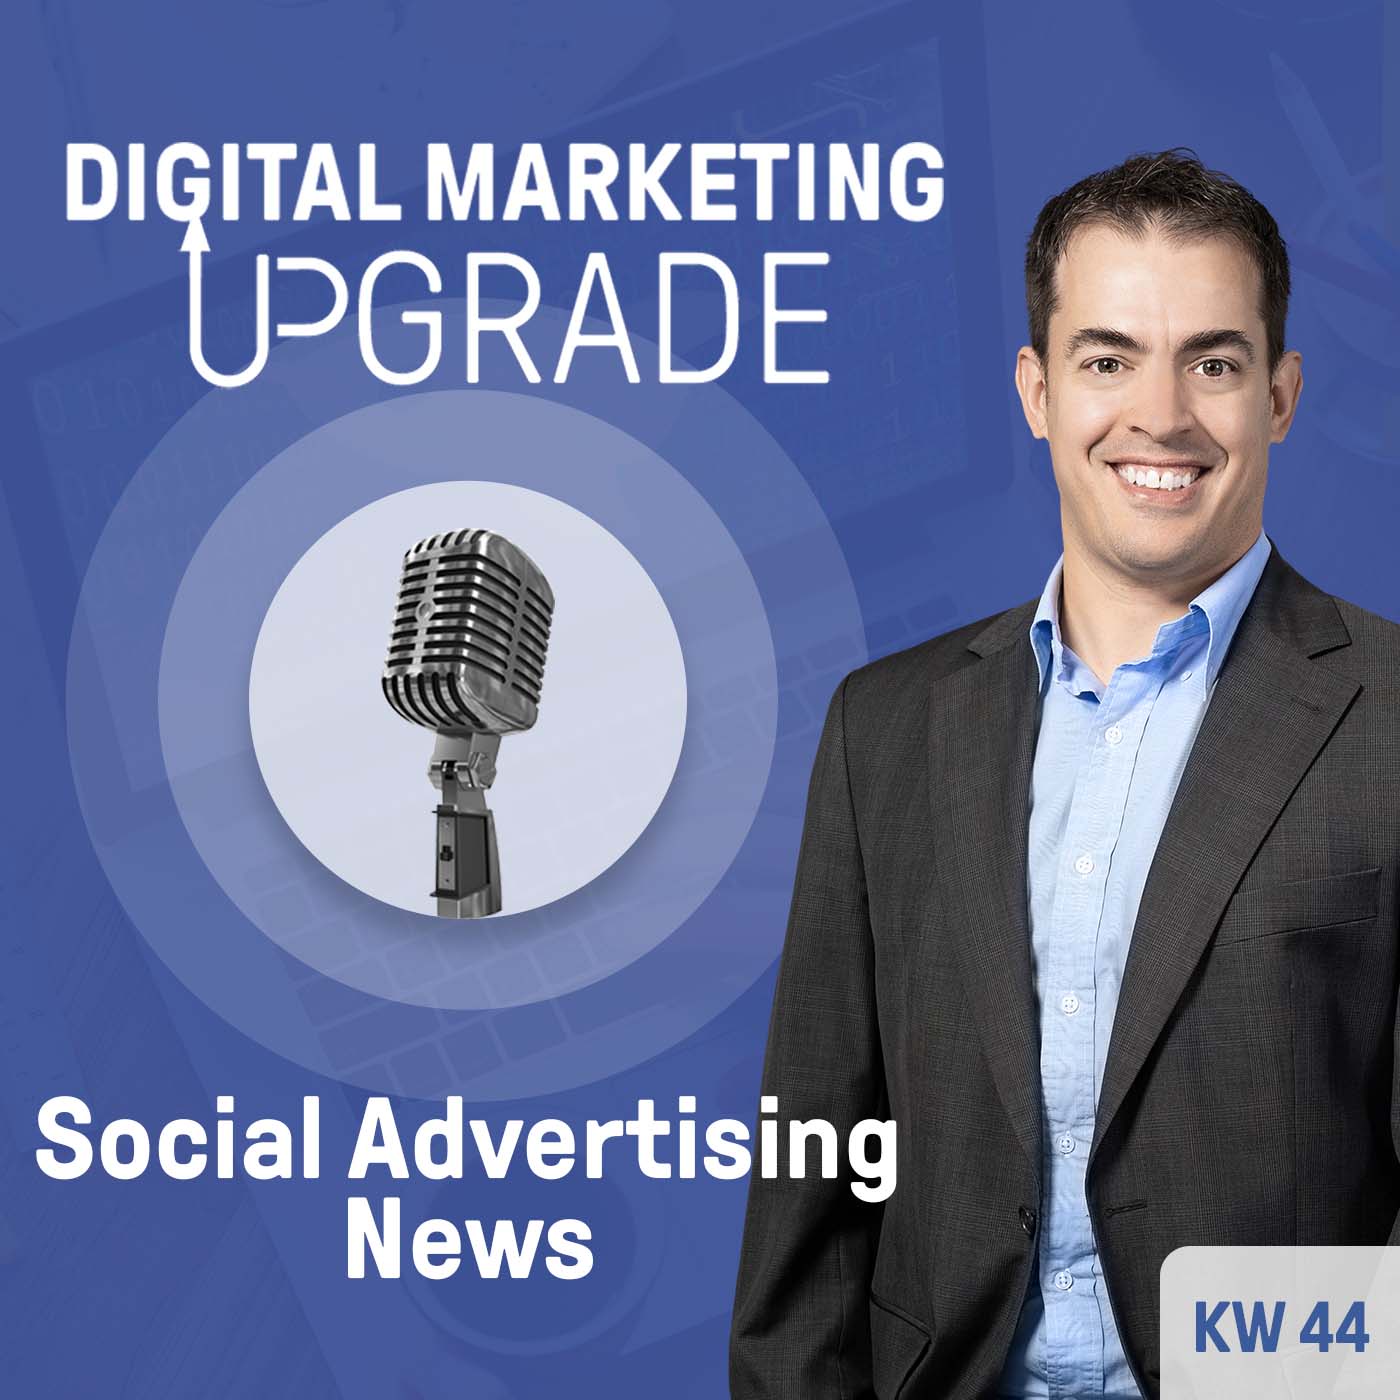 Social Advertising News - KW 44/22